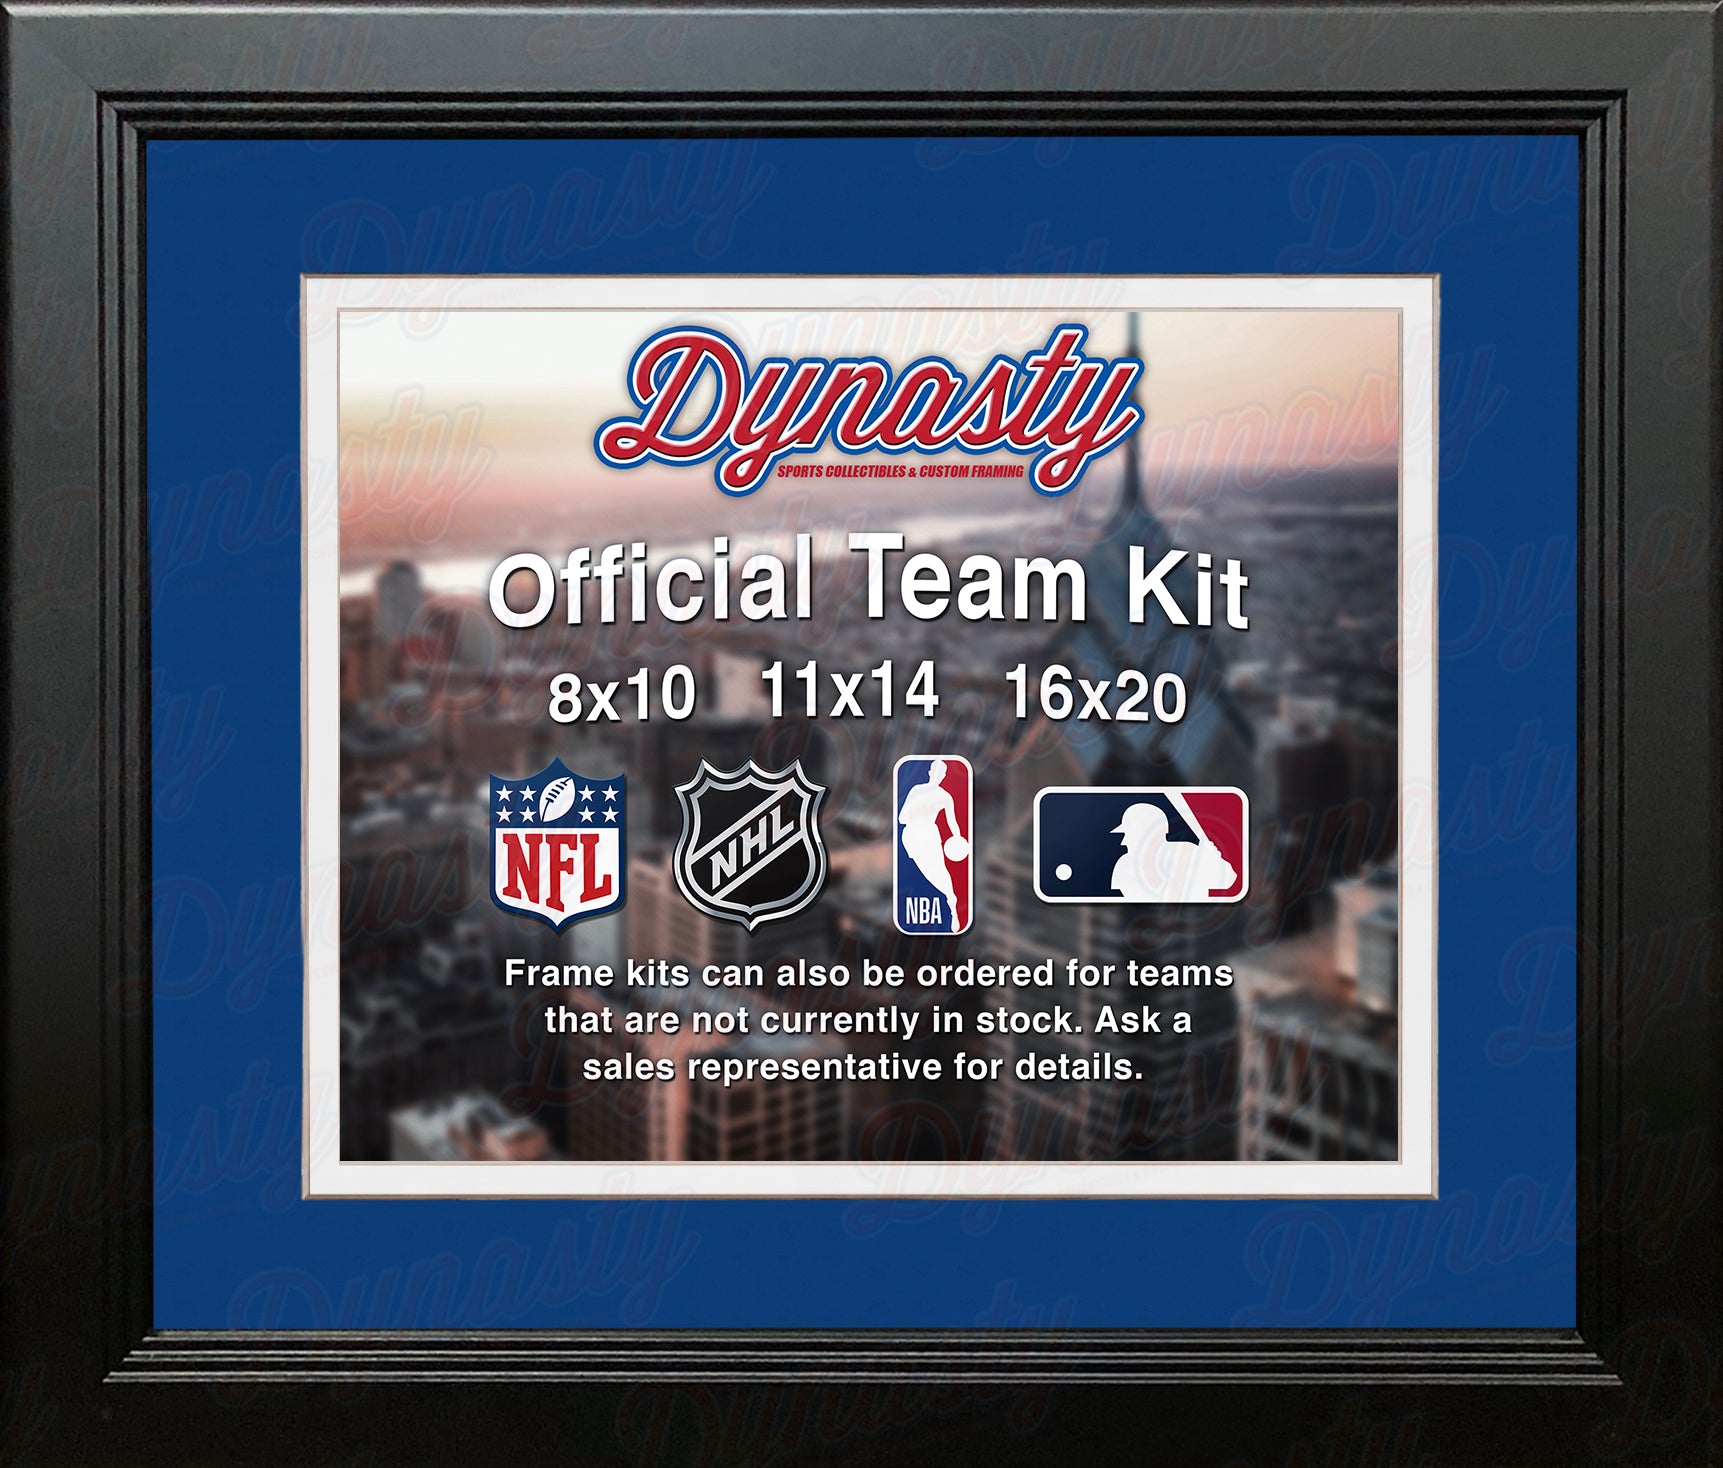 MLB Baseball Photo Picture Frame Kit - Tampa Bay Rays (Blue Matting, White Trim) - Dynasty Sports & Framing 